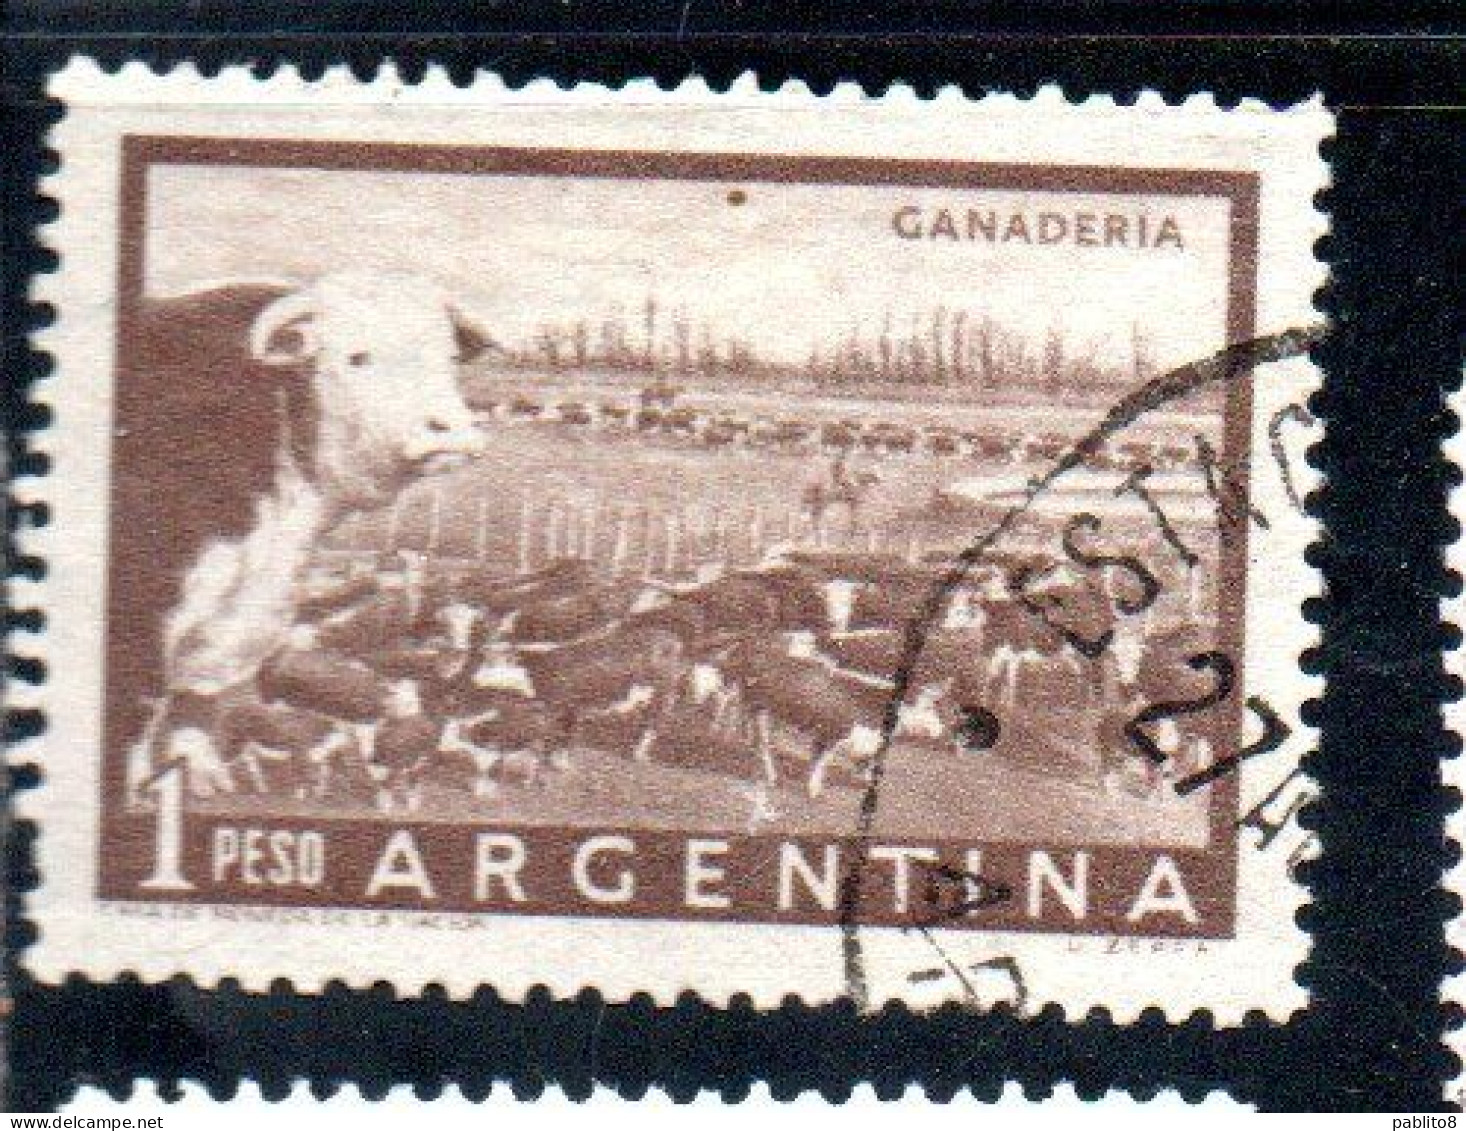 ARGENTINA 1954 1959 1958 CATTLE RANCH GANADERIA 1p USED USADO OBLITERE' - Gebruikt